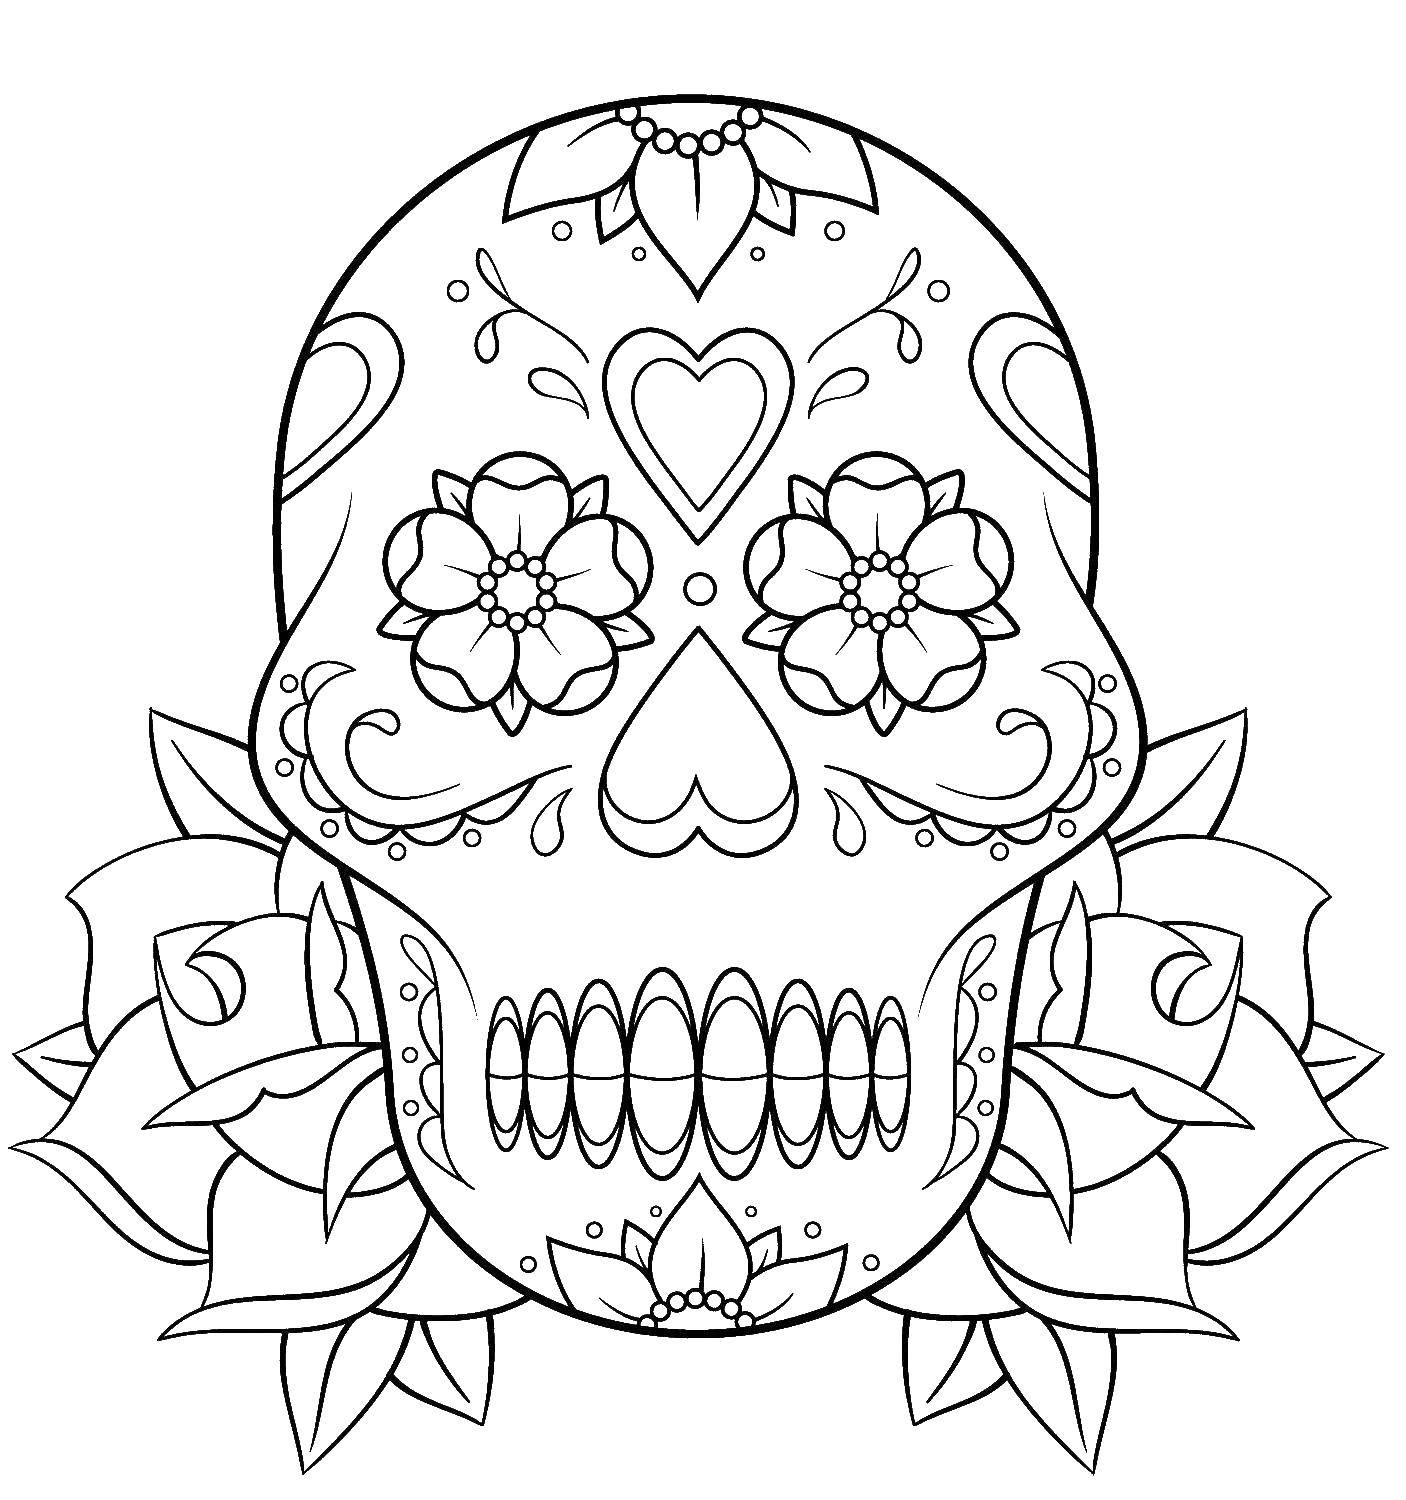 Coloring Beautiful skull. Category Skull. Tags:  skull, patterns, flowers.